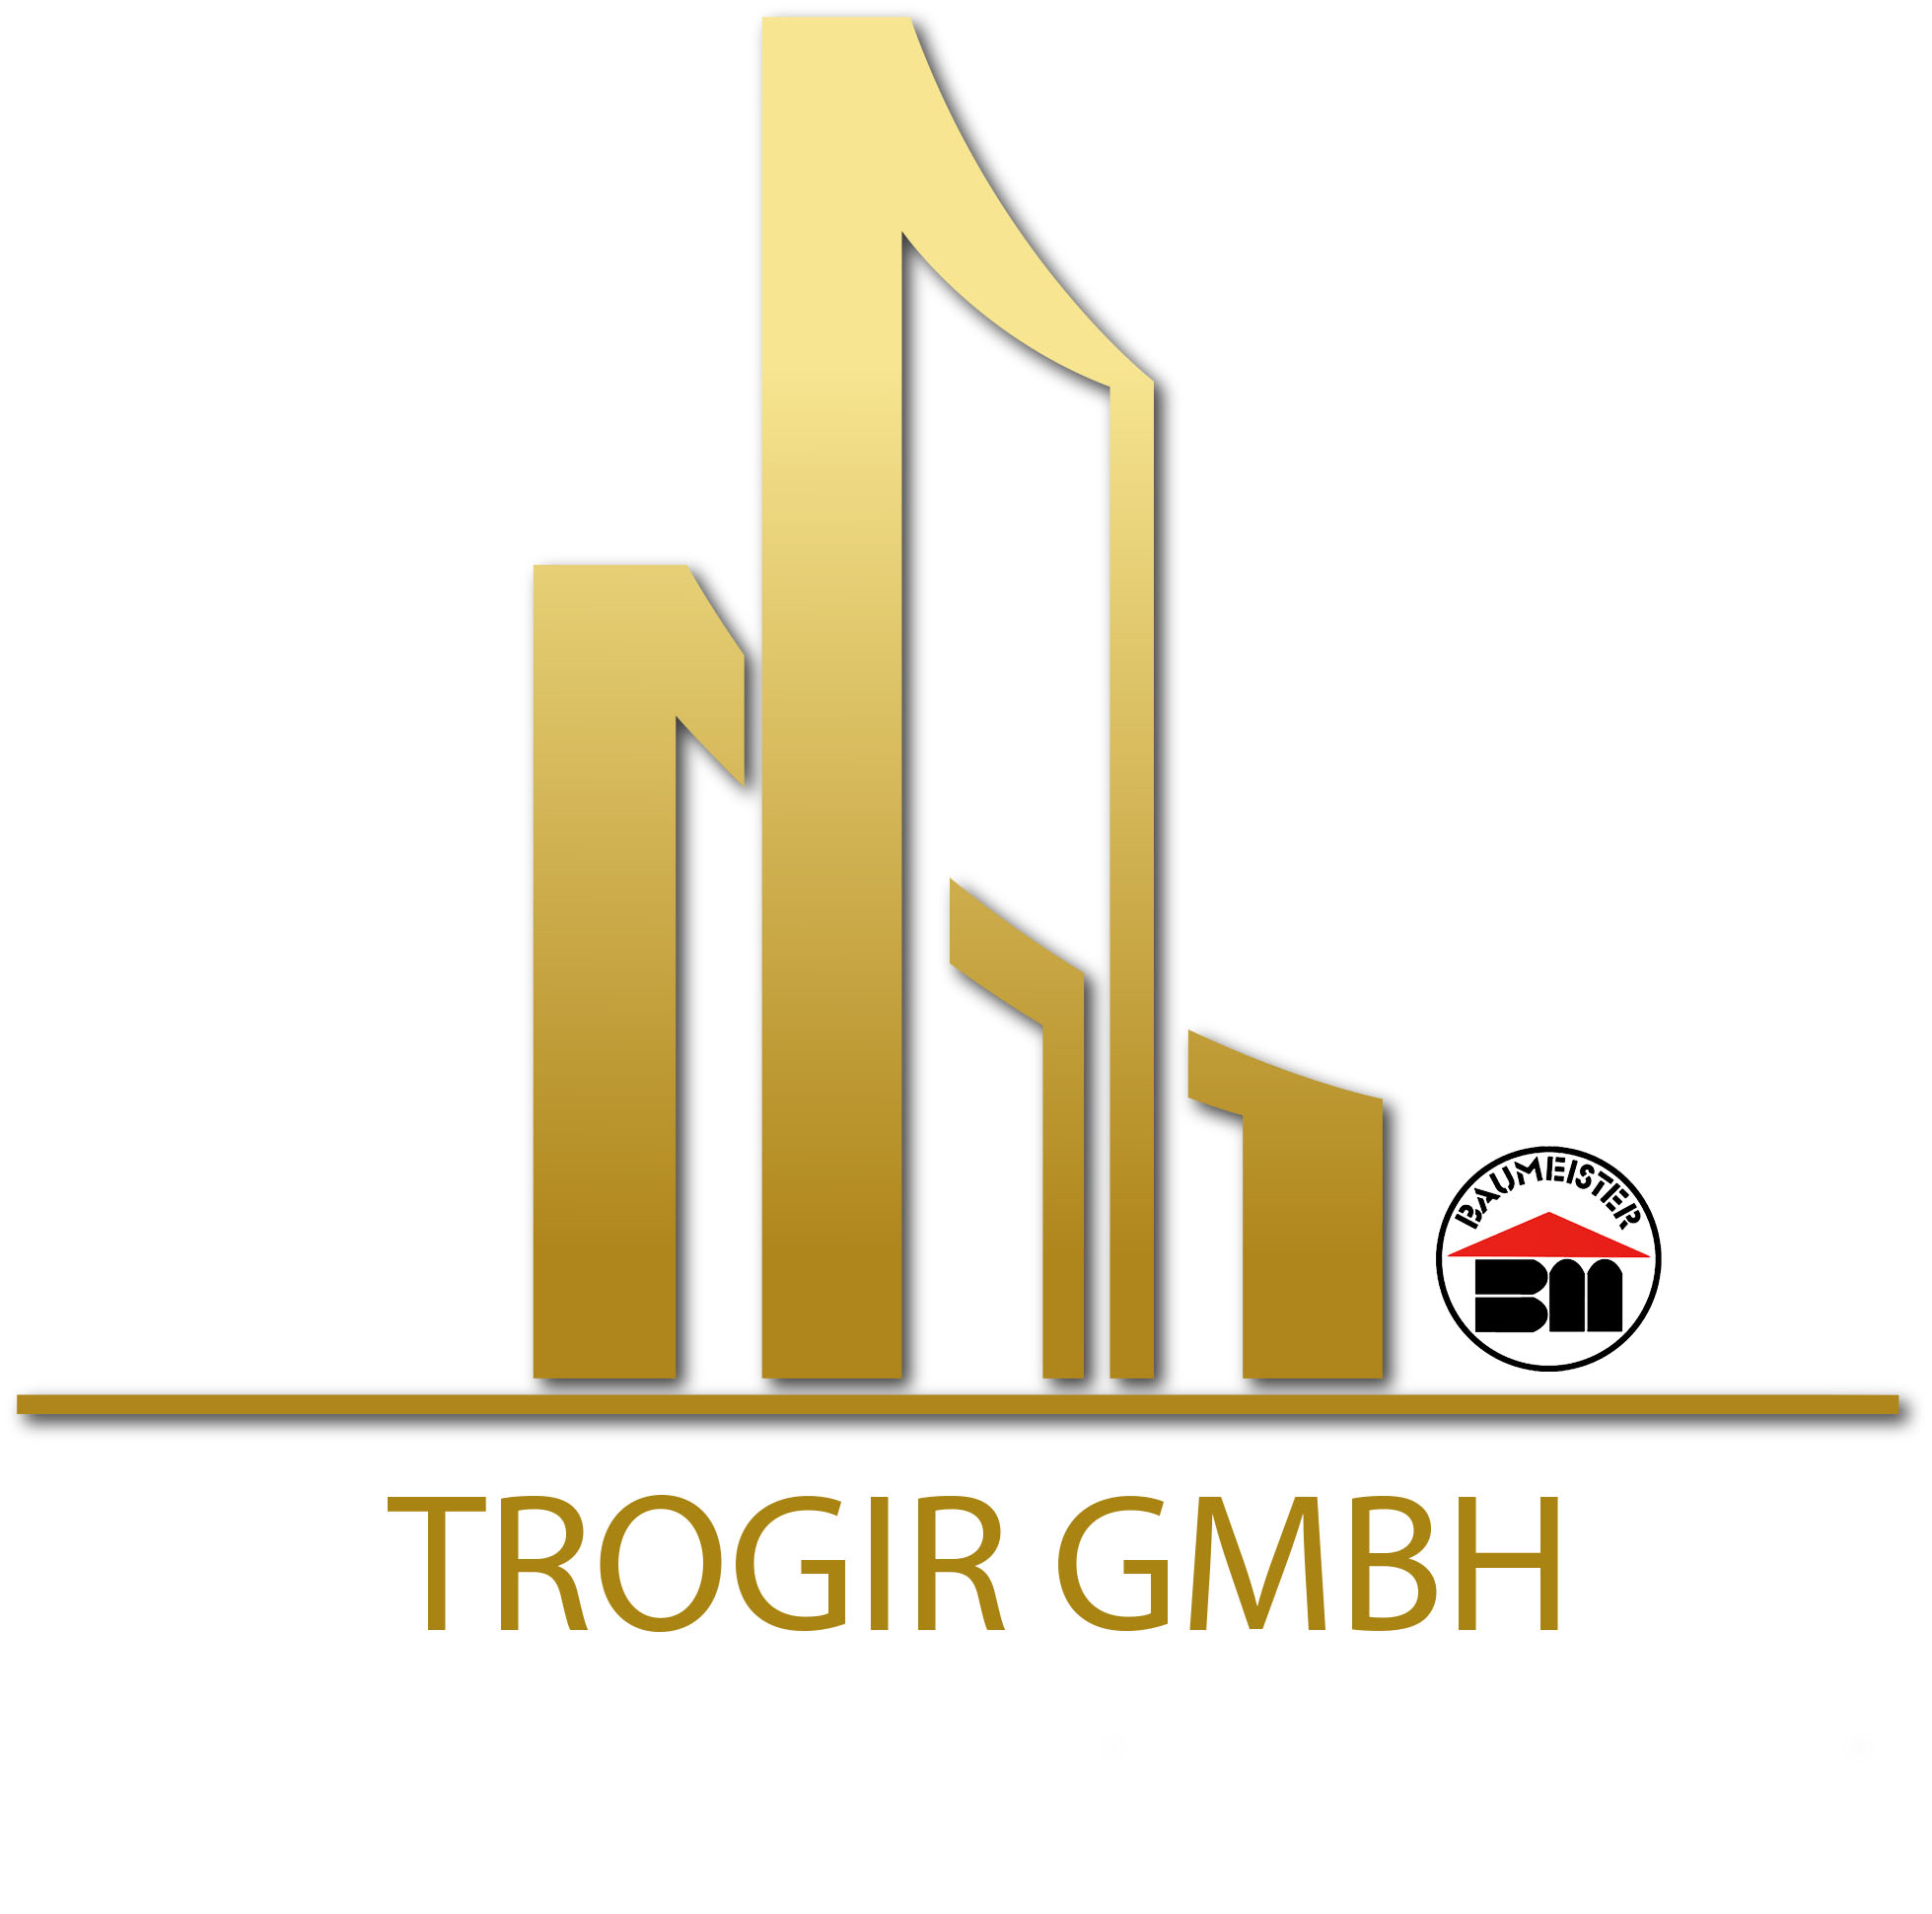 Trogir GmbH Sanierung, Altbausanierung, Fassadensanierung in Wien